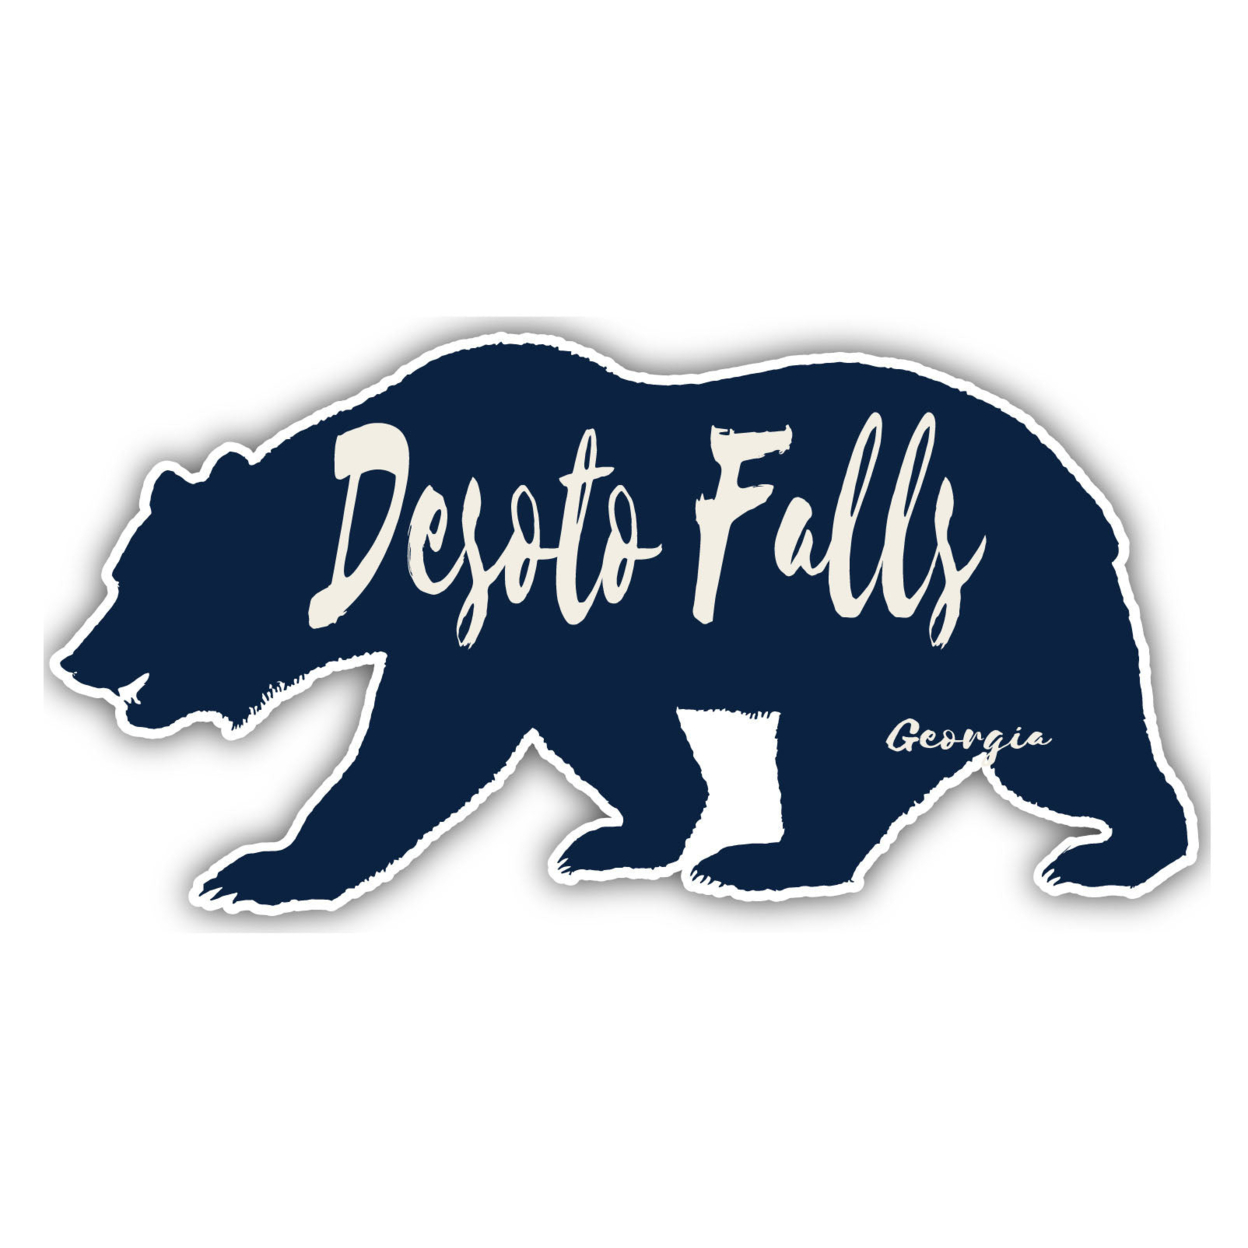 DeSoto Falls Georgia Souvenir Decorative Stickers (Choose Theme And Size) - 4-Pack, 6-Inch, Bear